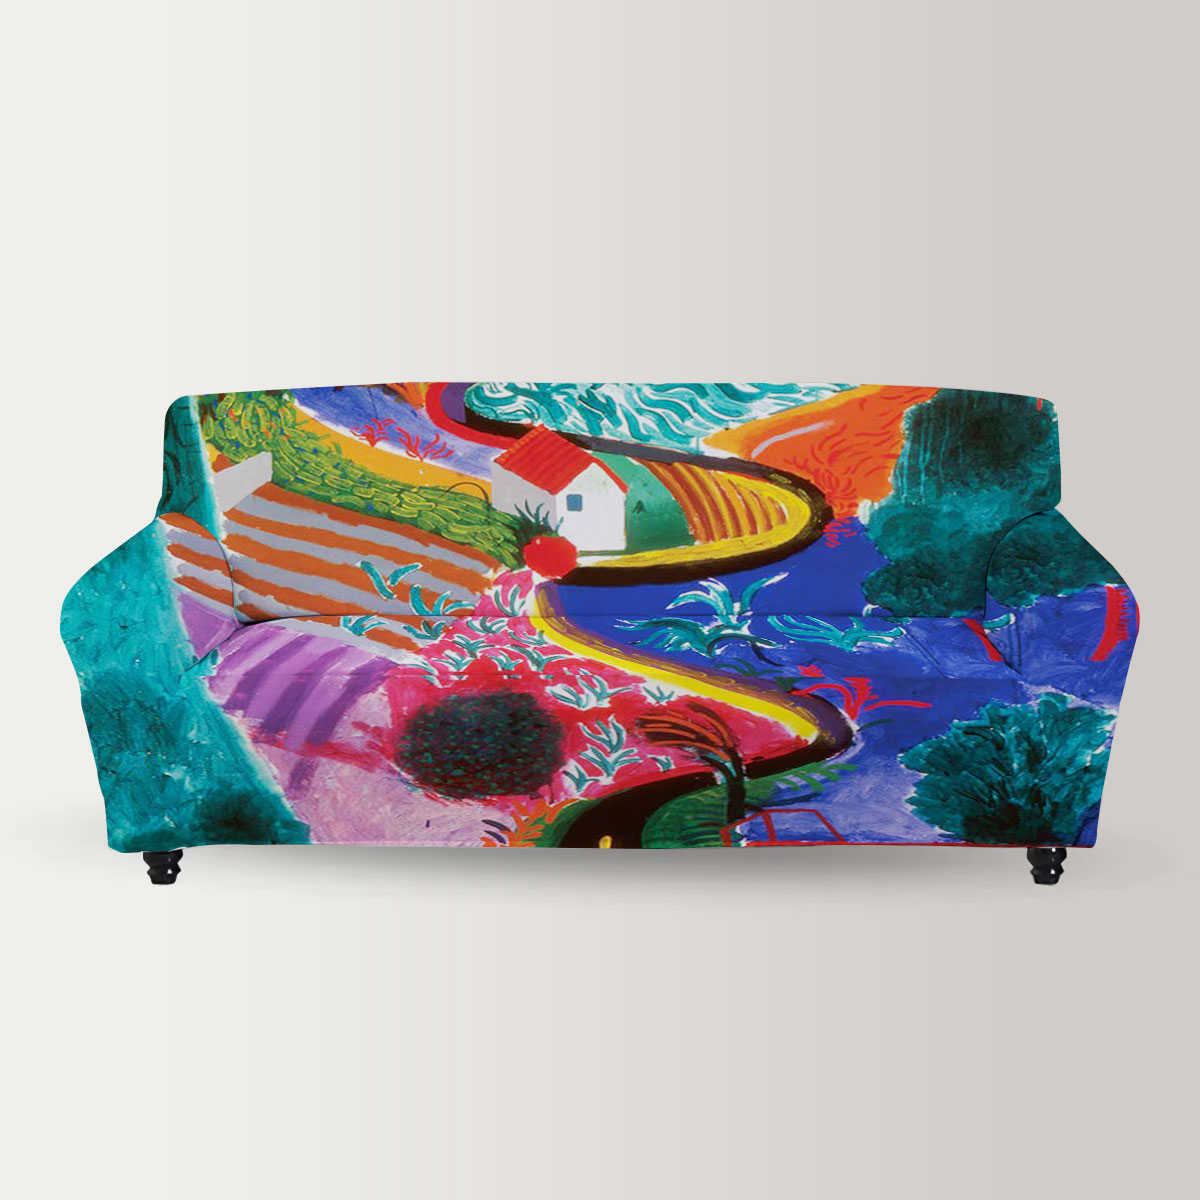 Colorful Canyon Sofa Cover